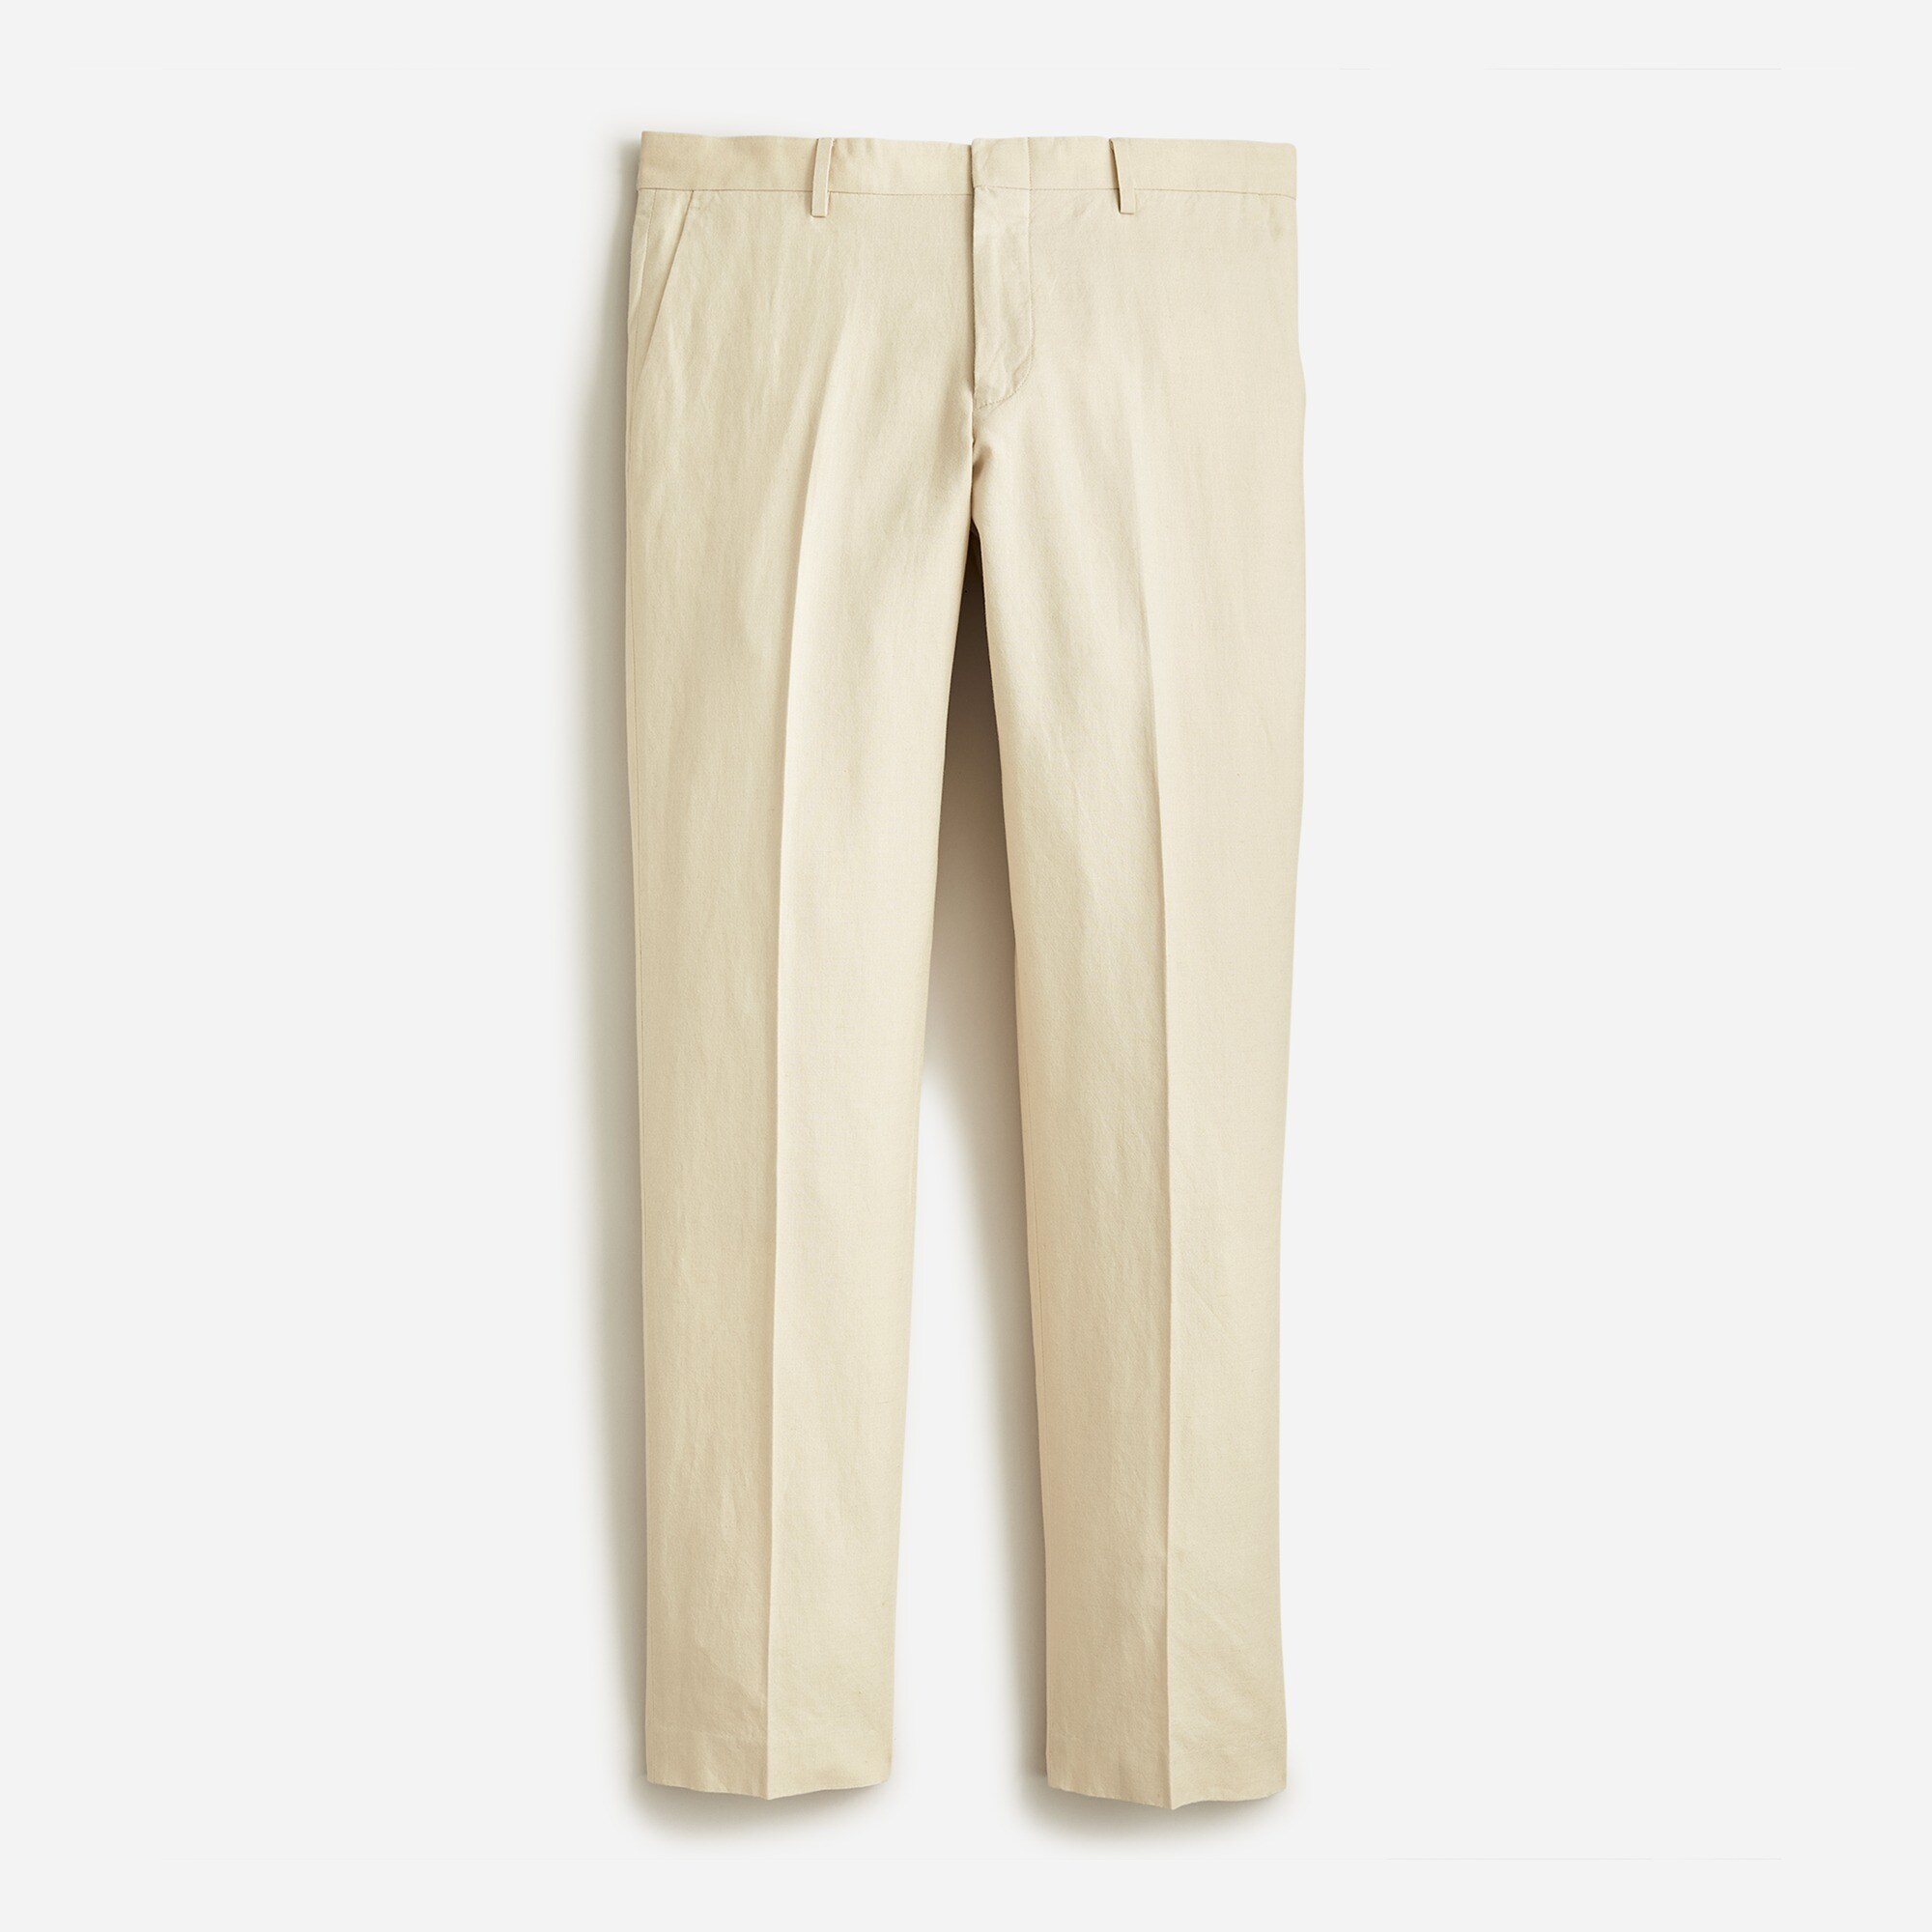  Ludlow Slim-fit unstructured suit pant in Irish cotton-linen blend